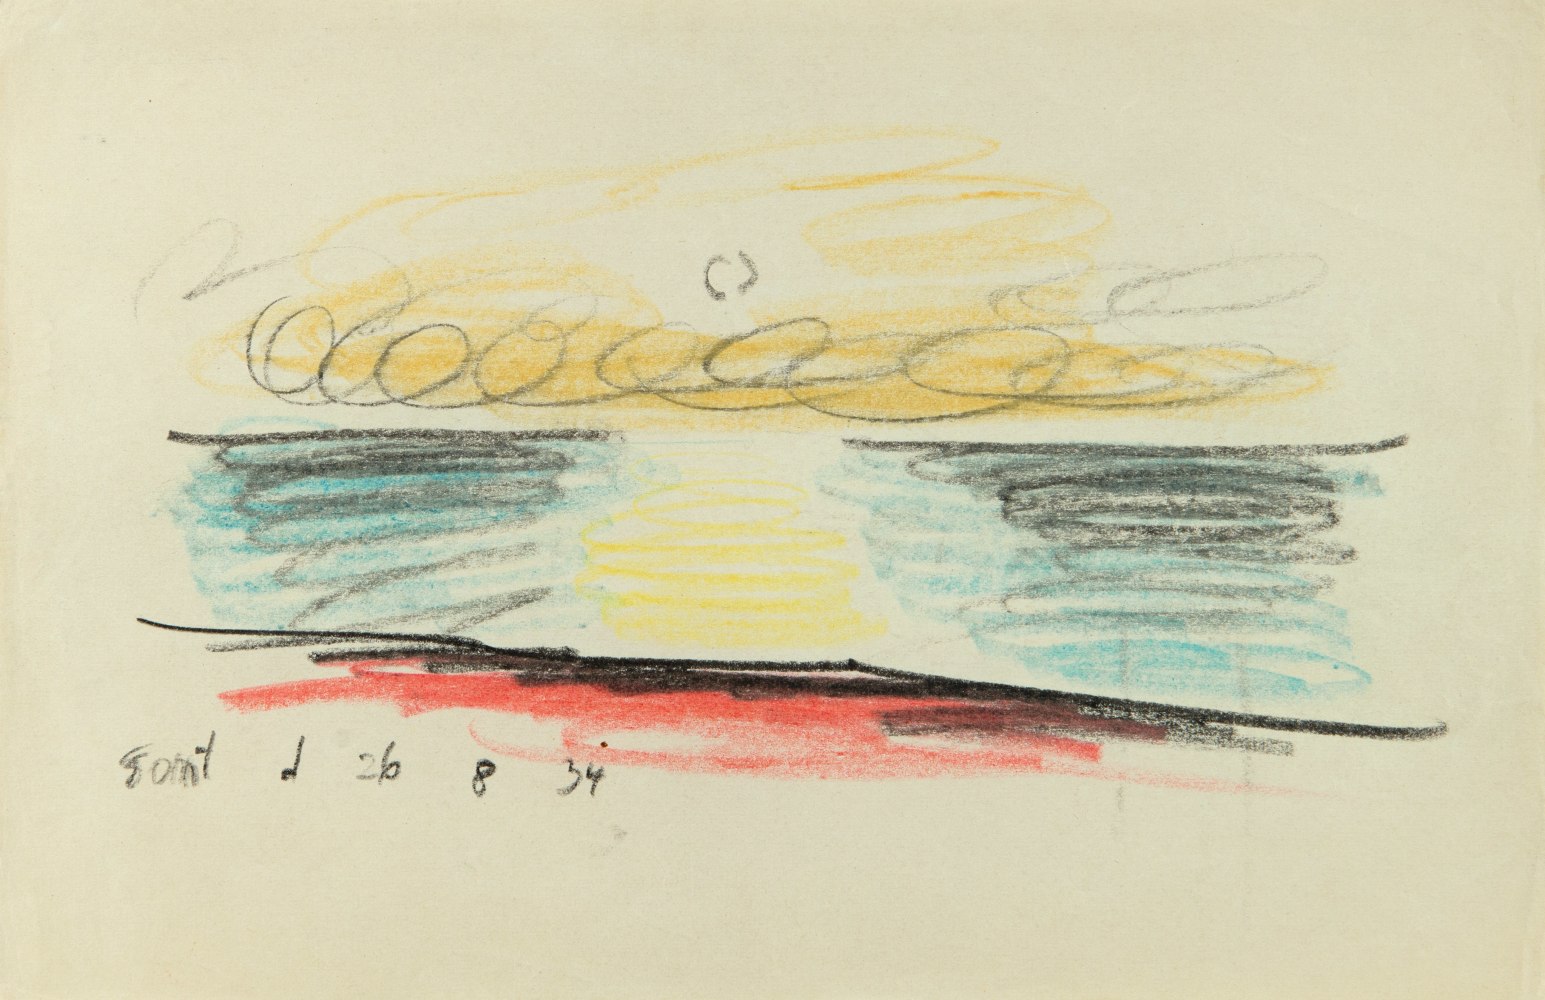 Lyonel&amp;nbsp;Feininger (1871&amp;ndash;1956)
(Sunset at Sea), 1934
Crayon on paper
5 3/4&amp;nbsp;x 9&amp;nbsp;in. (14.6&amp;nbsp;x 22.9&amp;nbsp;cm)
Dated lower left:&amp;nbsp;Sont d 26 8 34